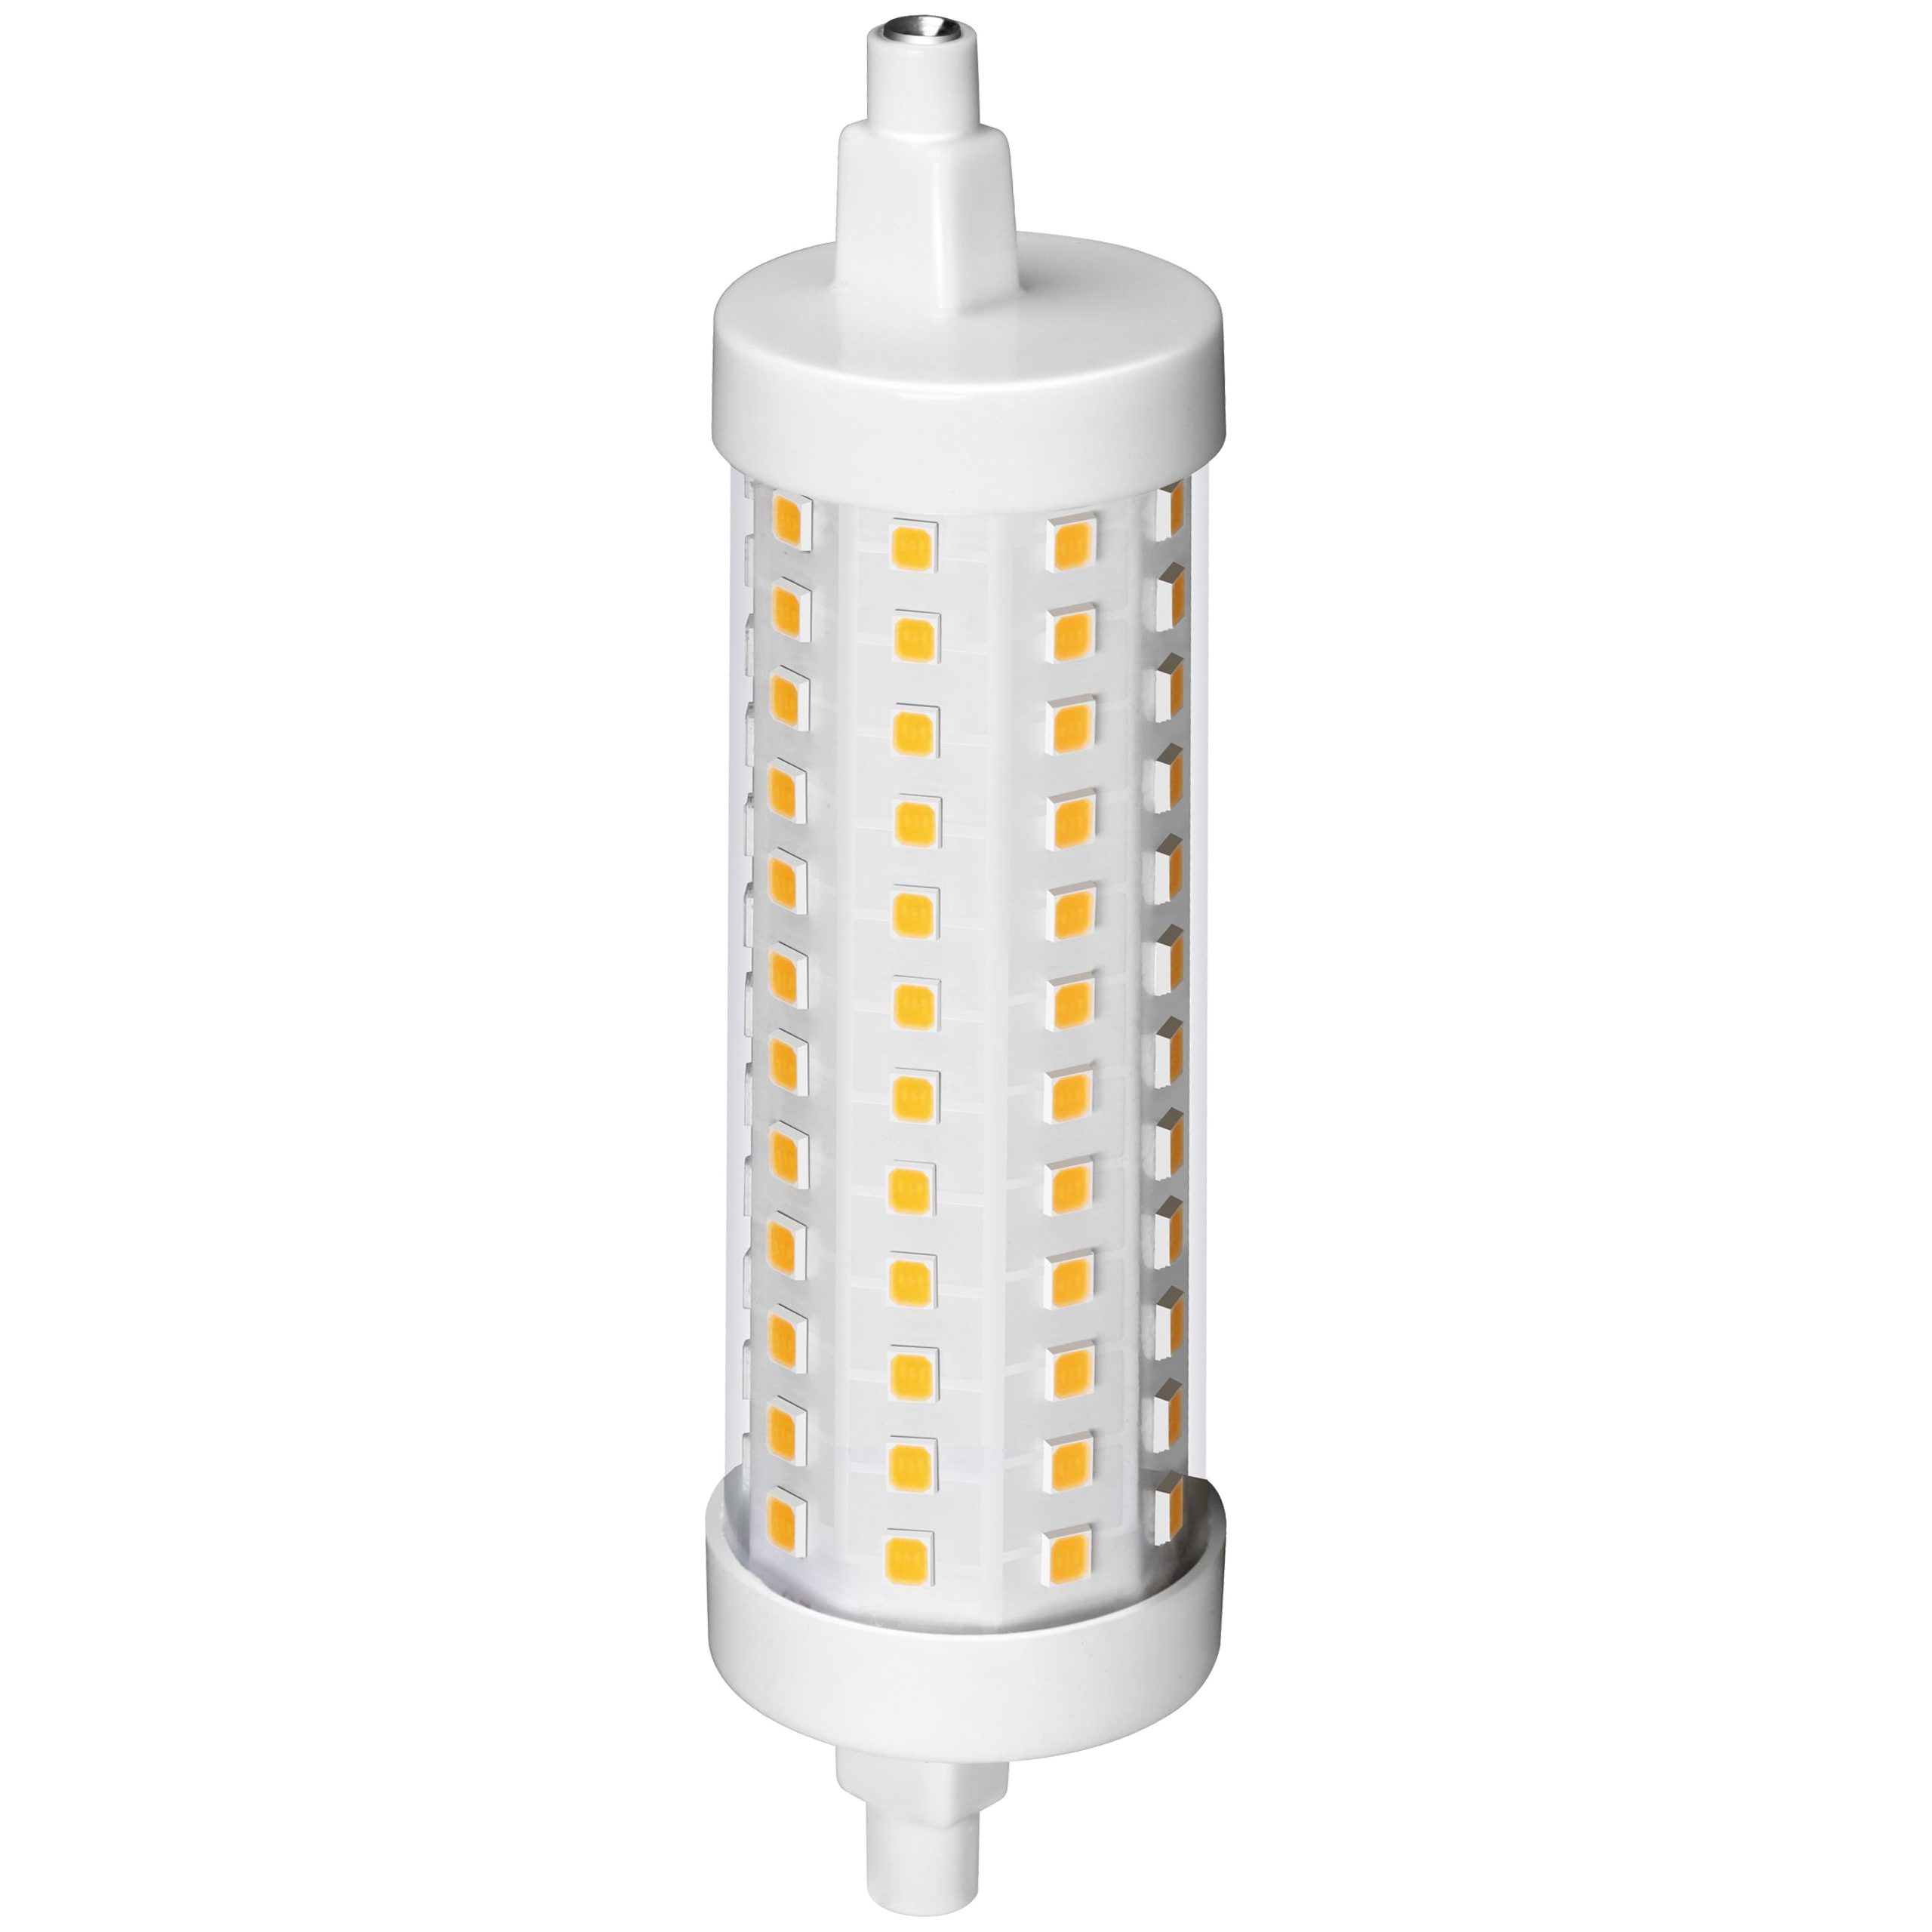 LED's light LED-Leuchtmittel 0620119 LED Röhre, R7s, R7s dimmbar 12,5W  warmweiß Klar Ersatz für Halogenstab